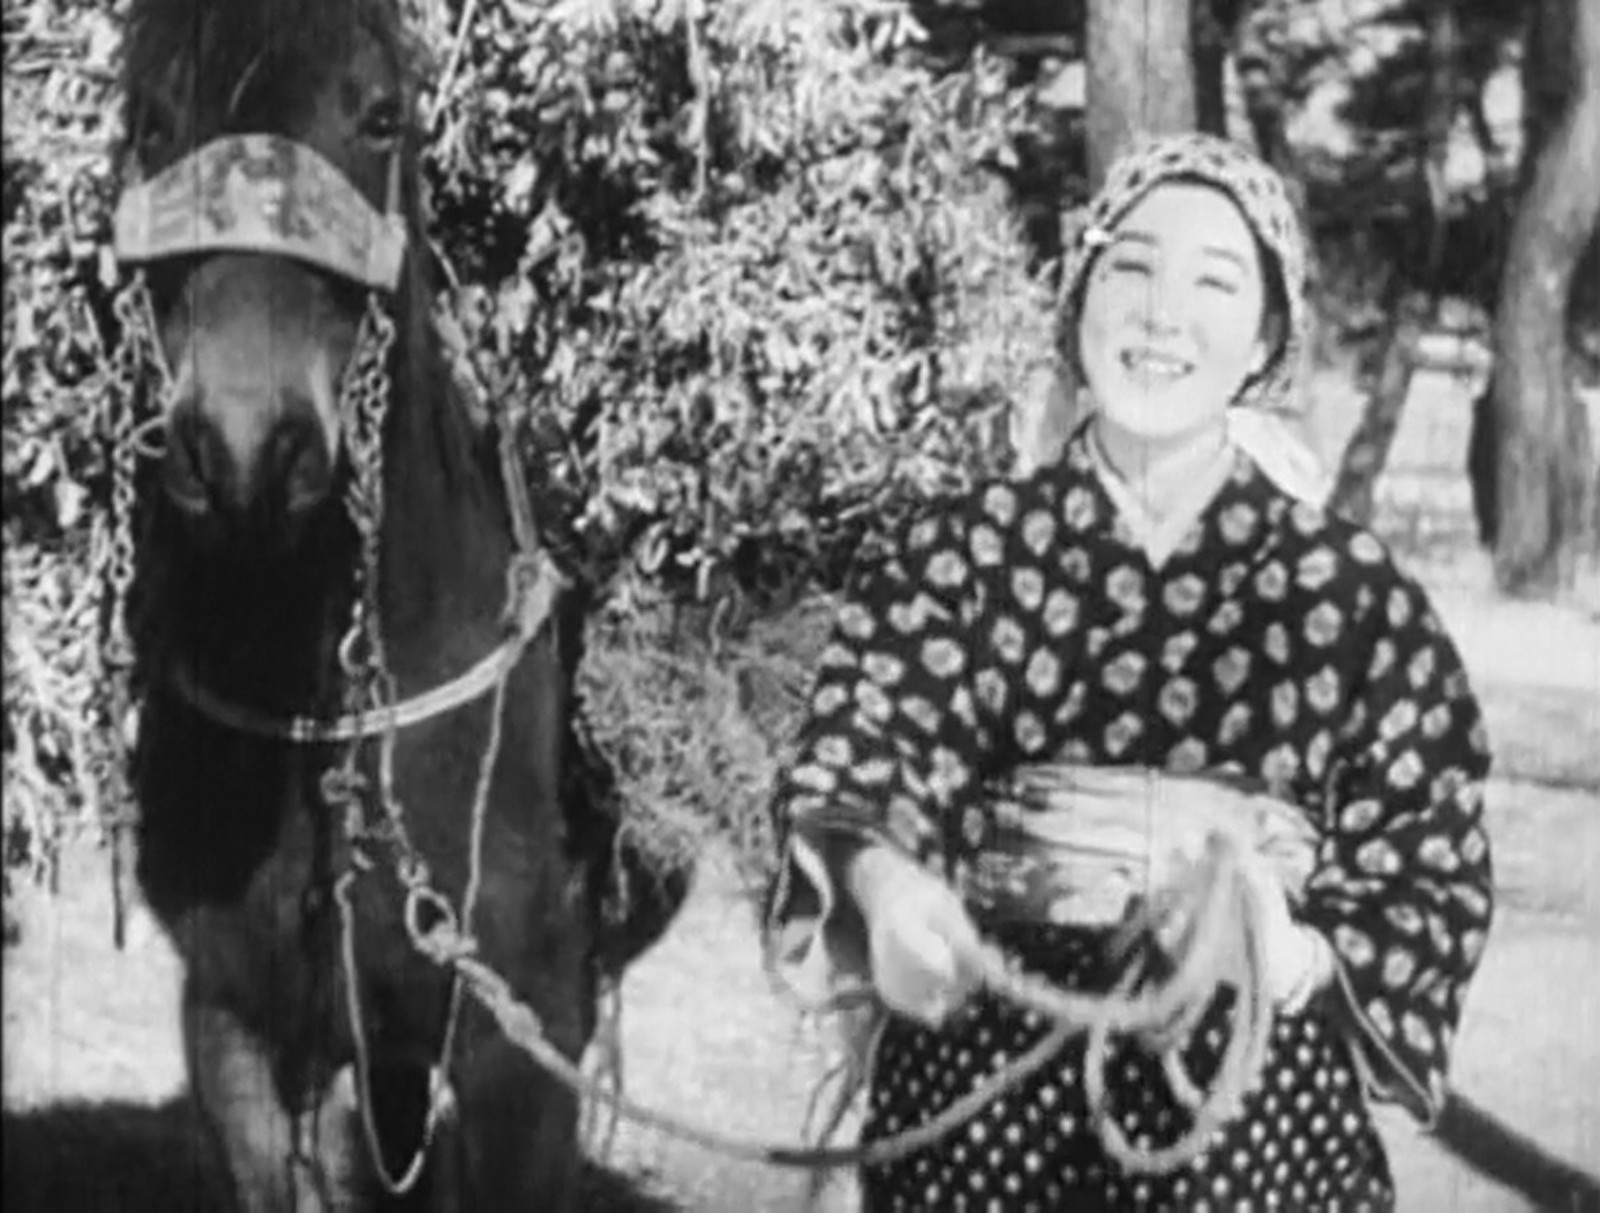 Horse (1941)